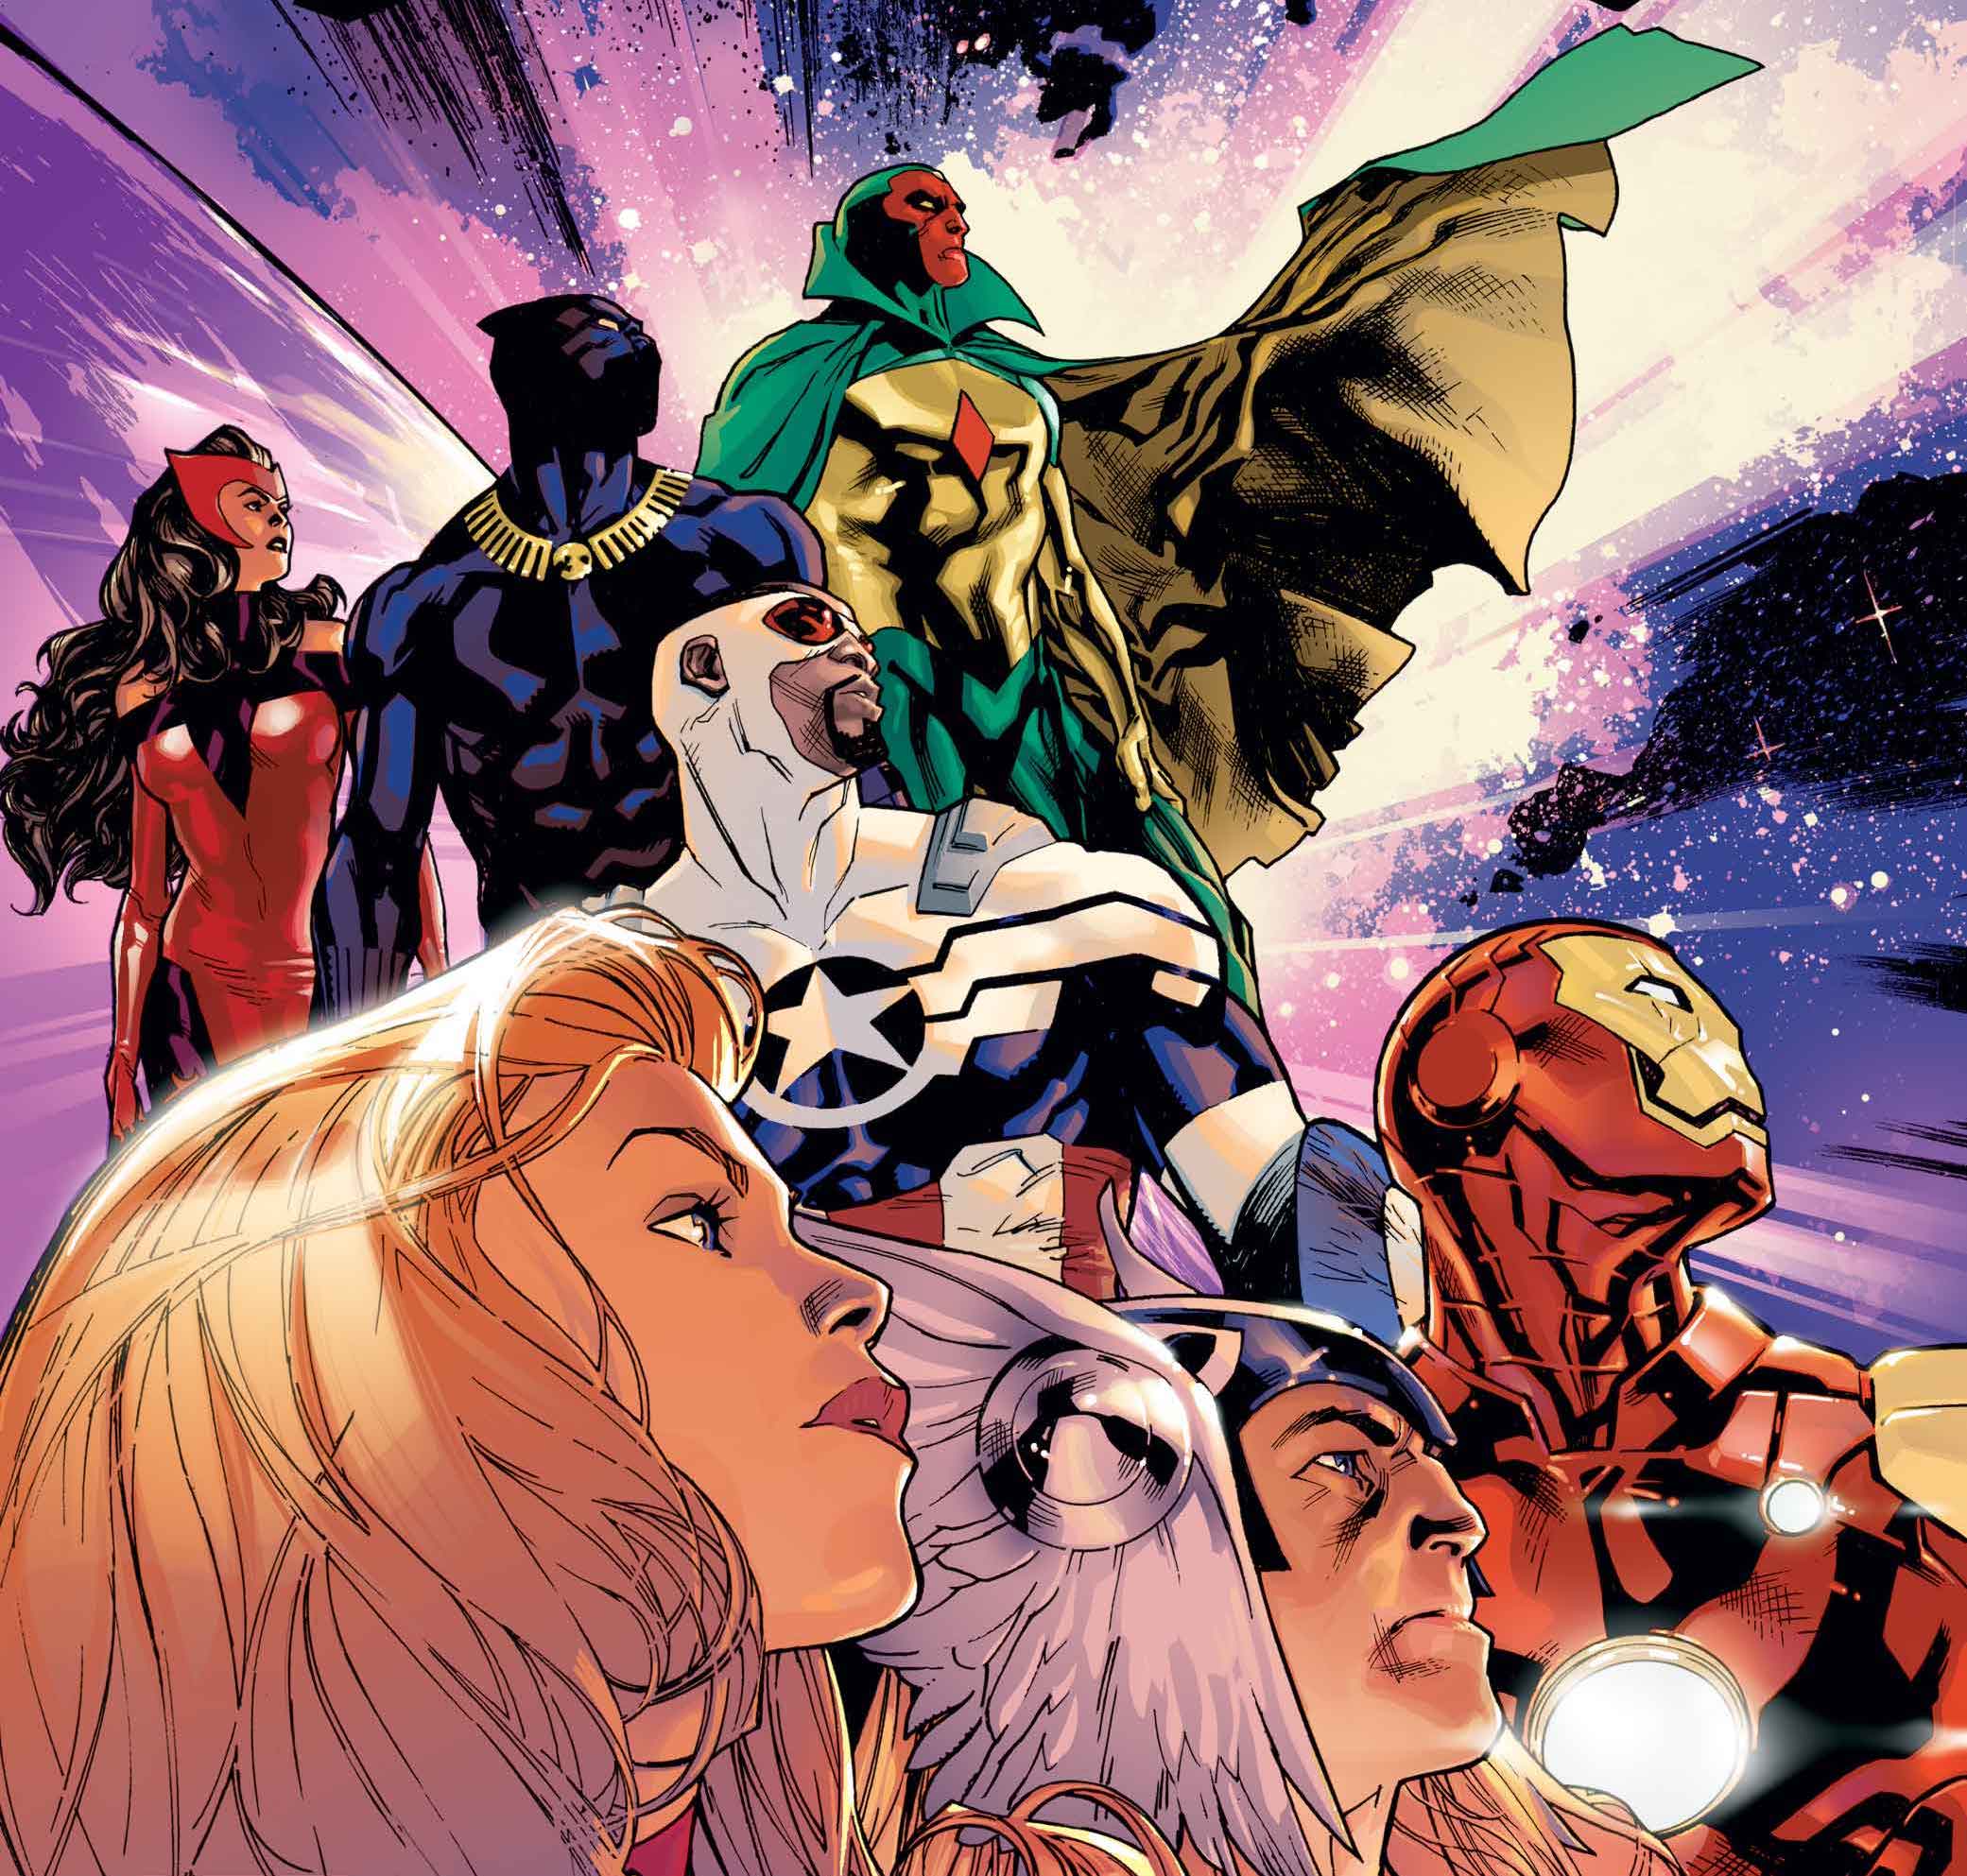 Captain Marvel-led 'Avengers' #1 launching May 17th